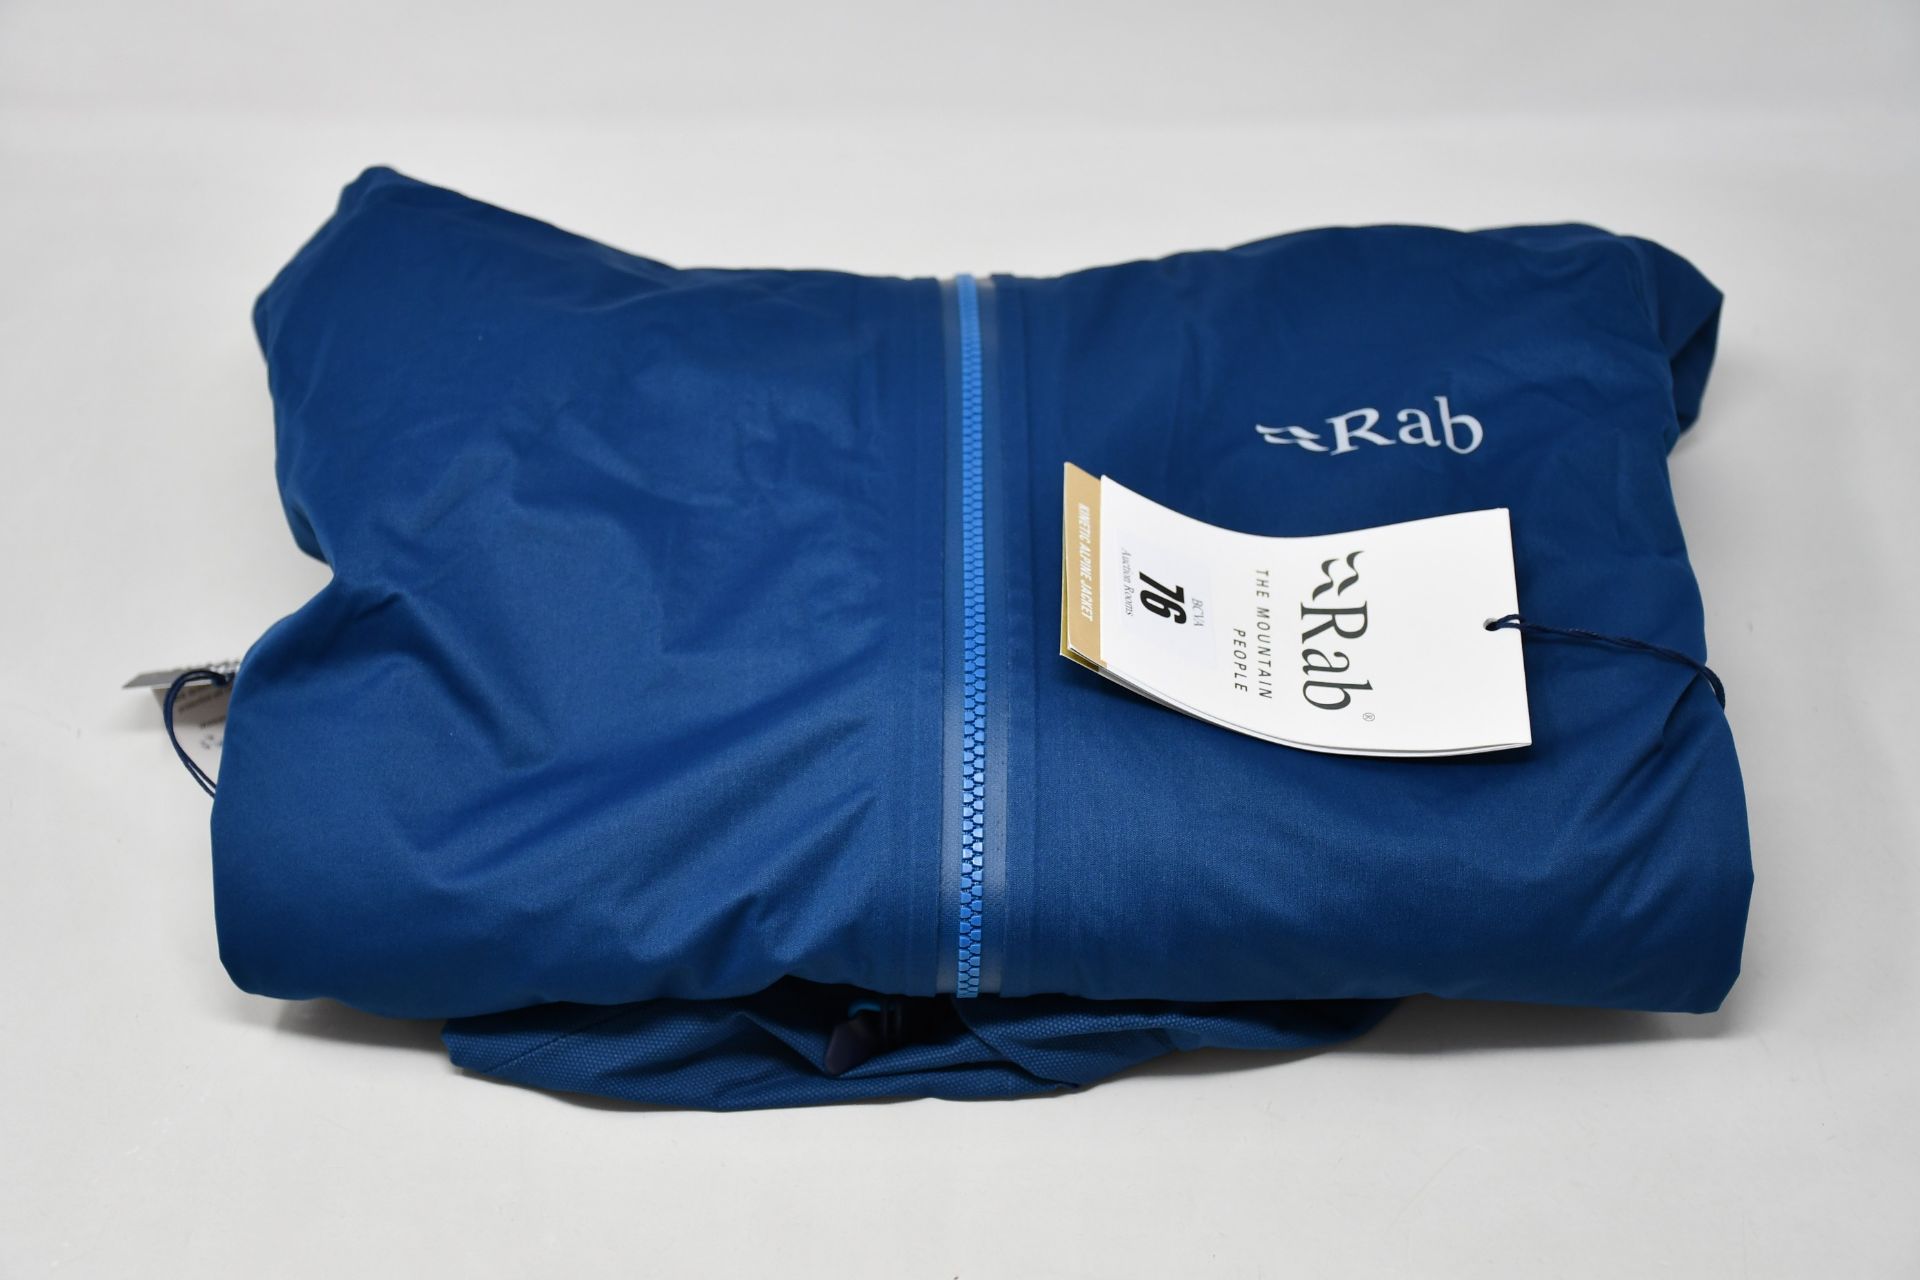 An as new Rab Kinetic Alpine jacket (XXL - RRP £157).